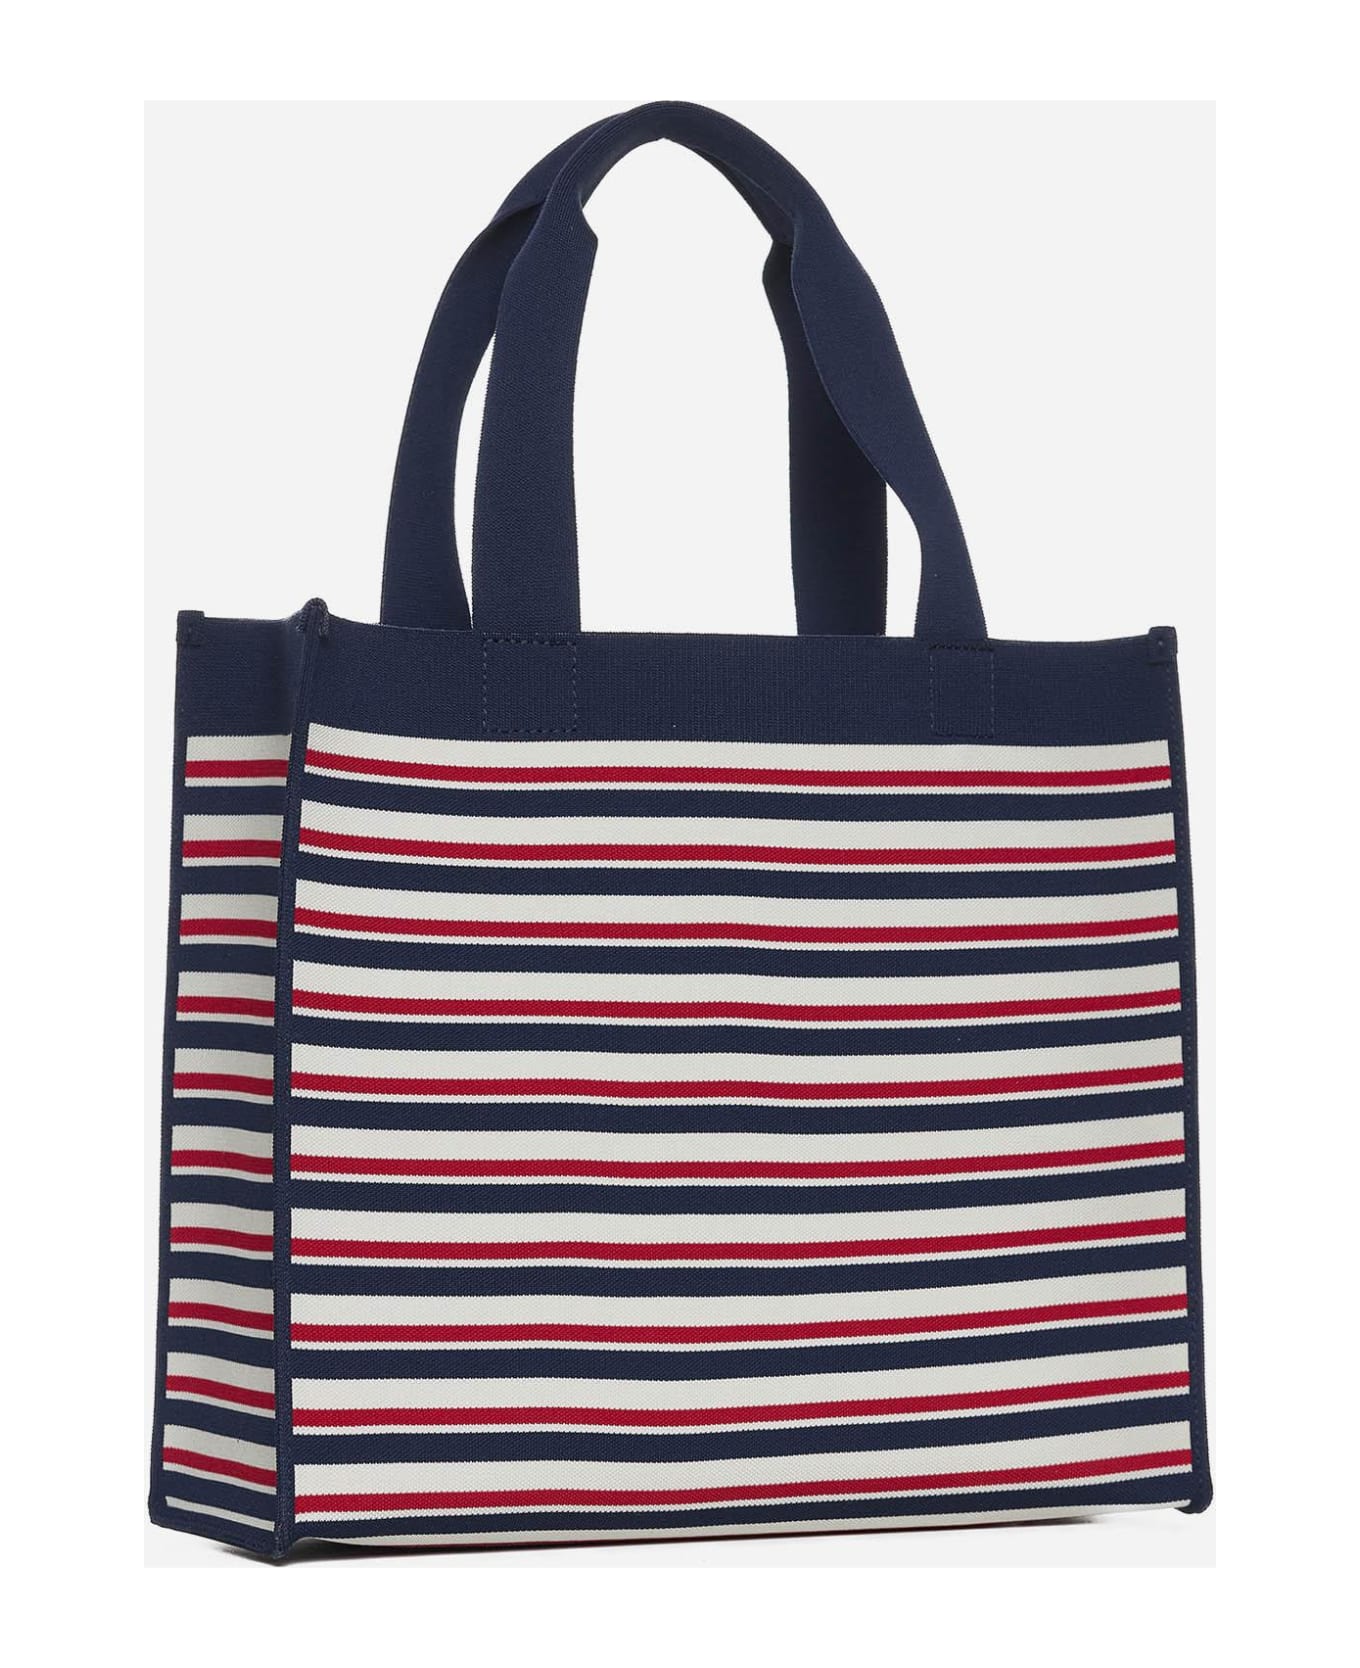 Marni Striped Canvas Medium Shopping Bag - Marine/ivory/red トートバッグ